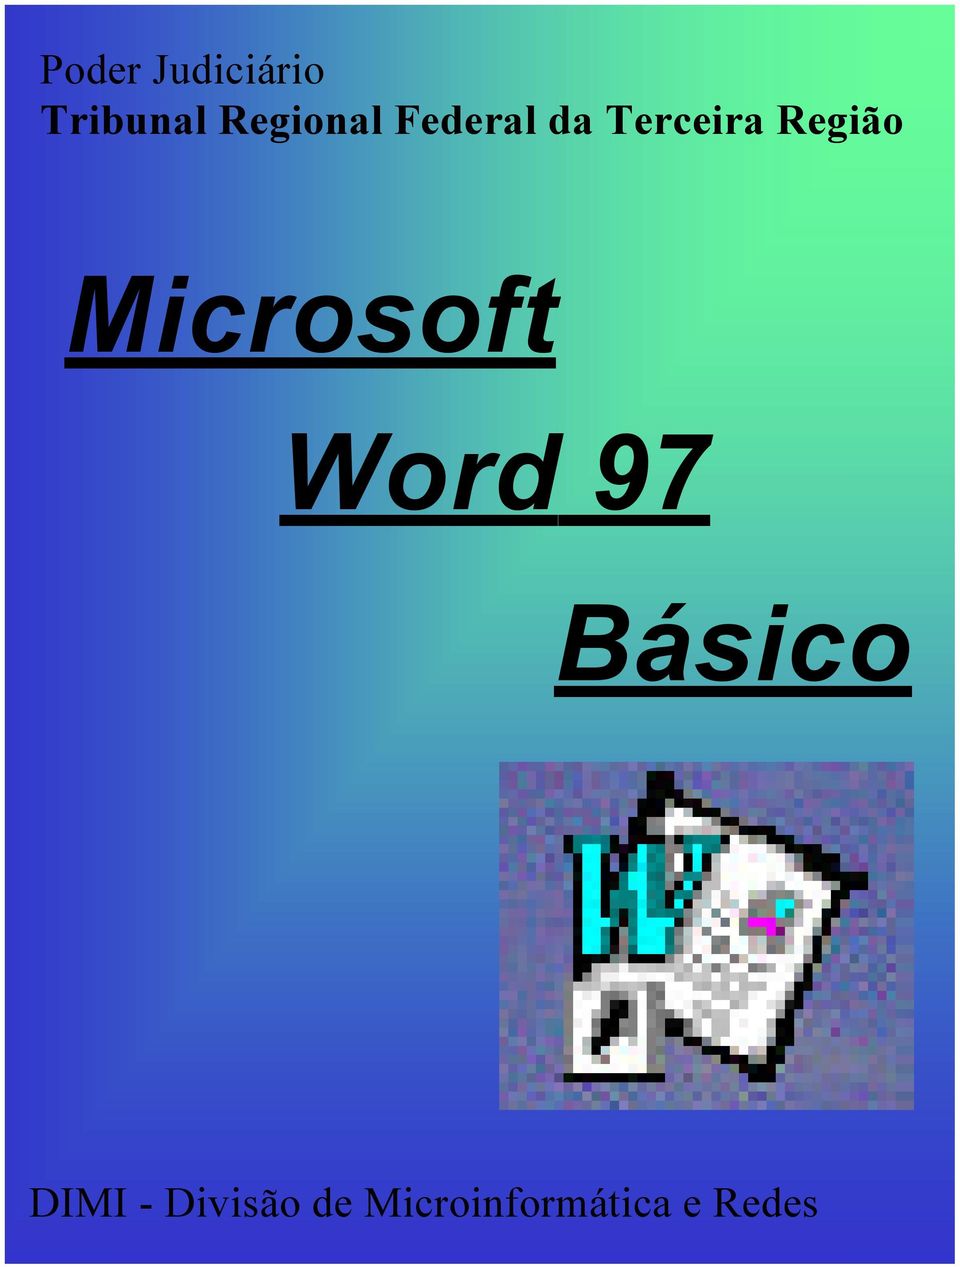 Região Microsoft Word 97 Básico